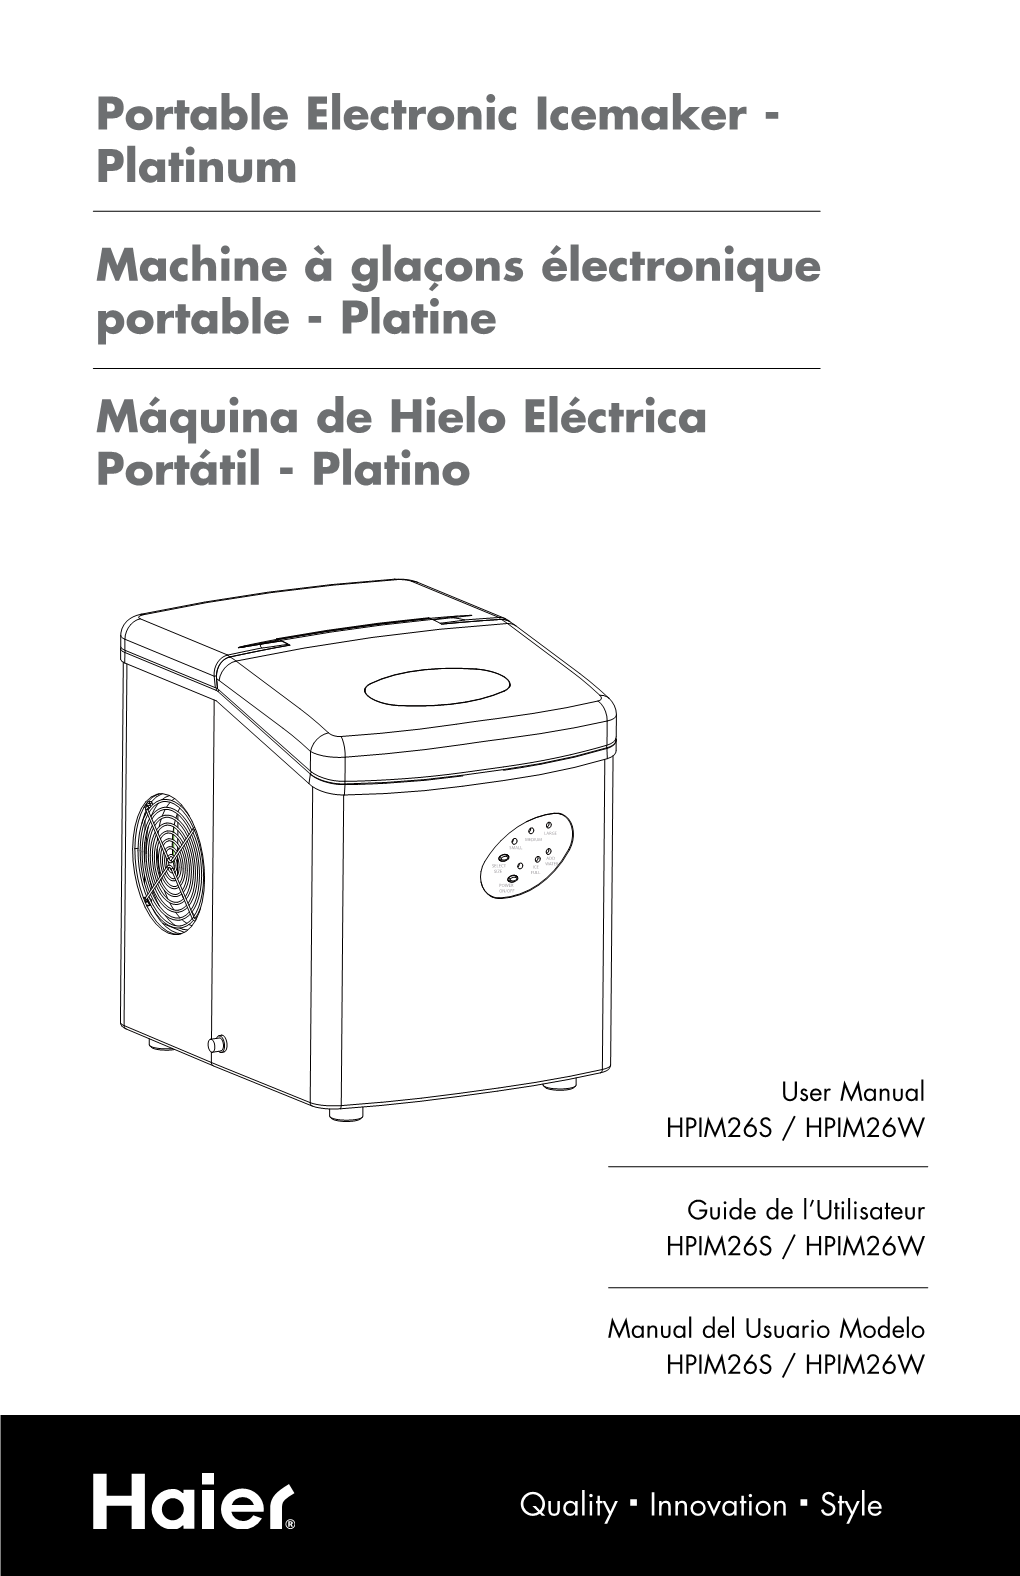 Portable Electronic Icemaker - Platinum